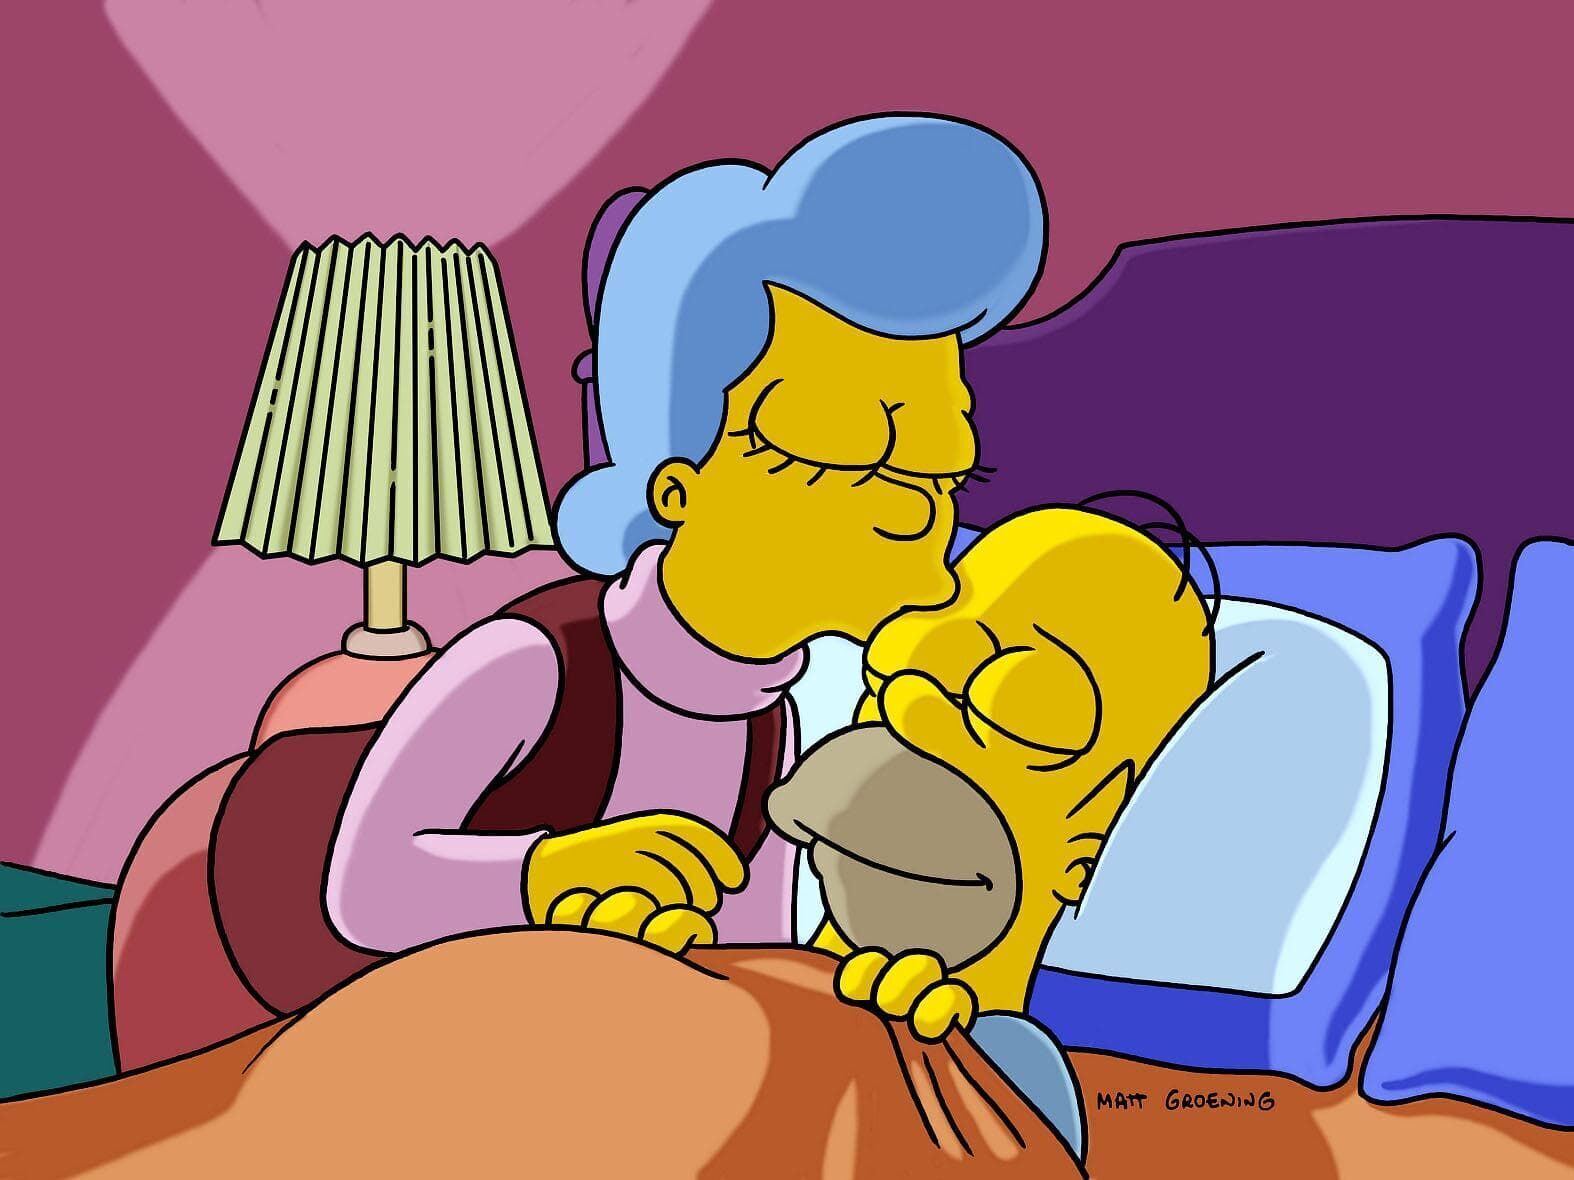 Les Simpson - Allocutions familiales